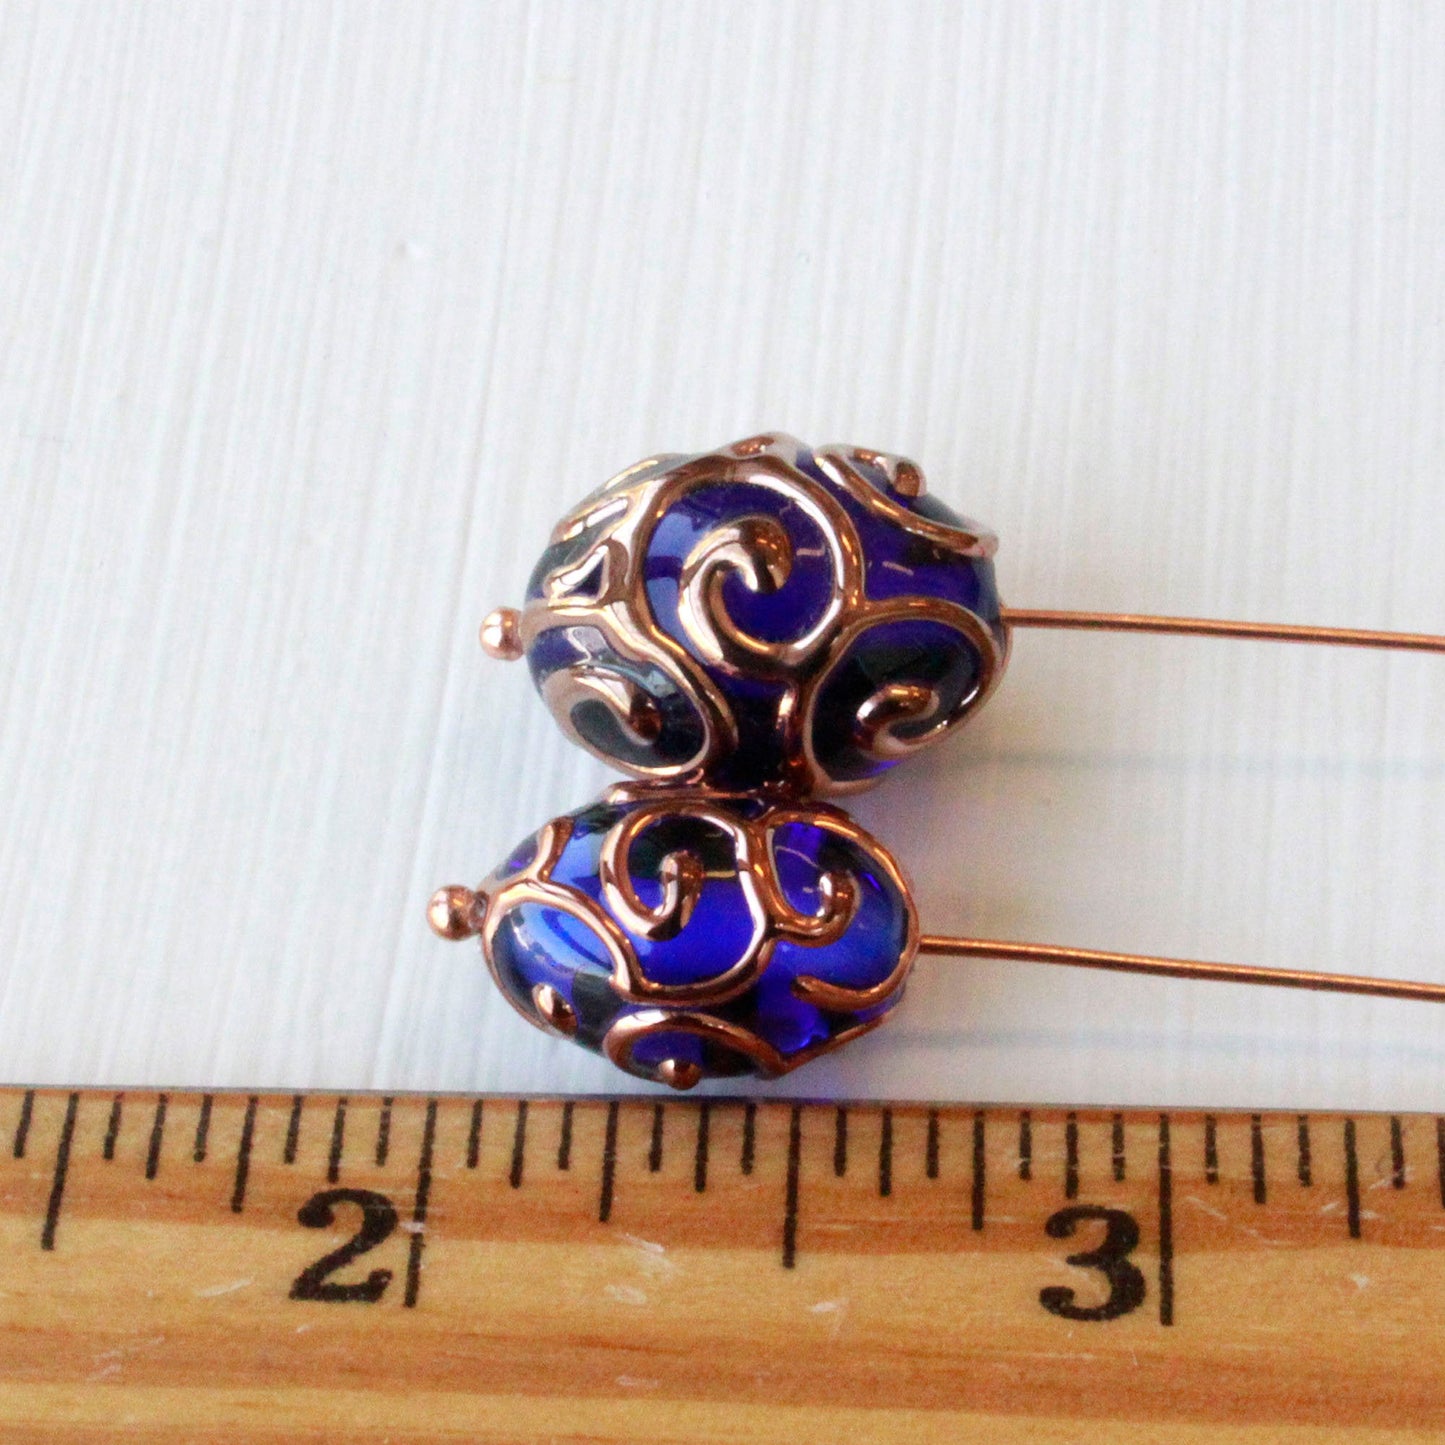 15x10mm Handmade Lampwork Beads - Cobalt - 2,4 or 8